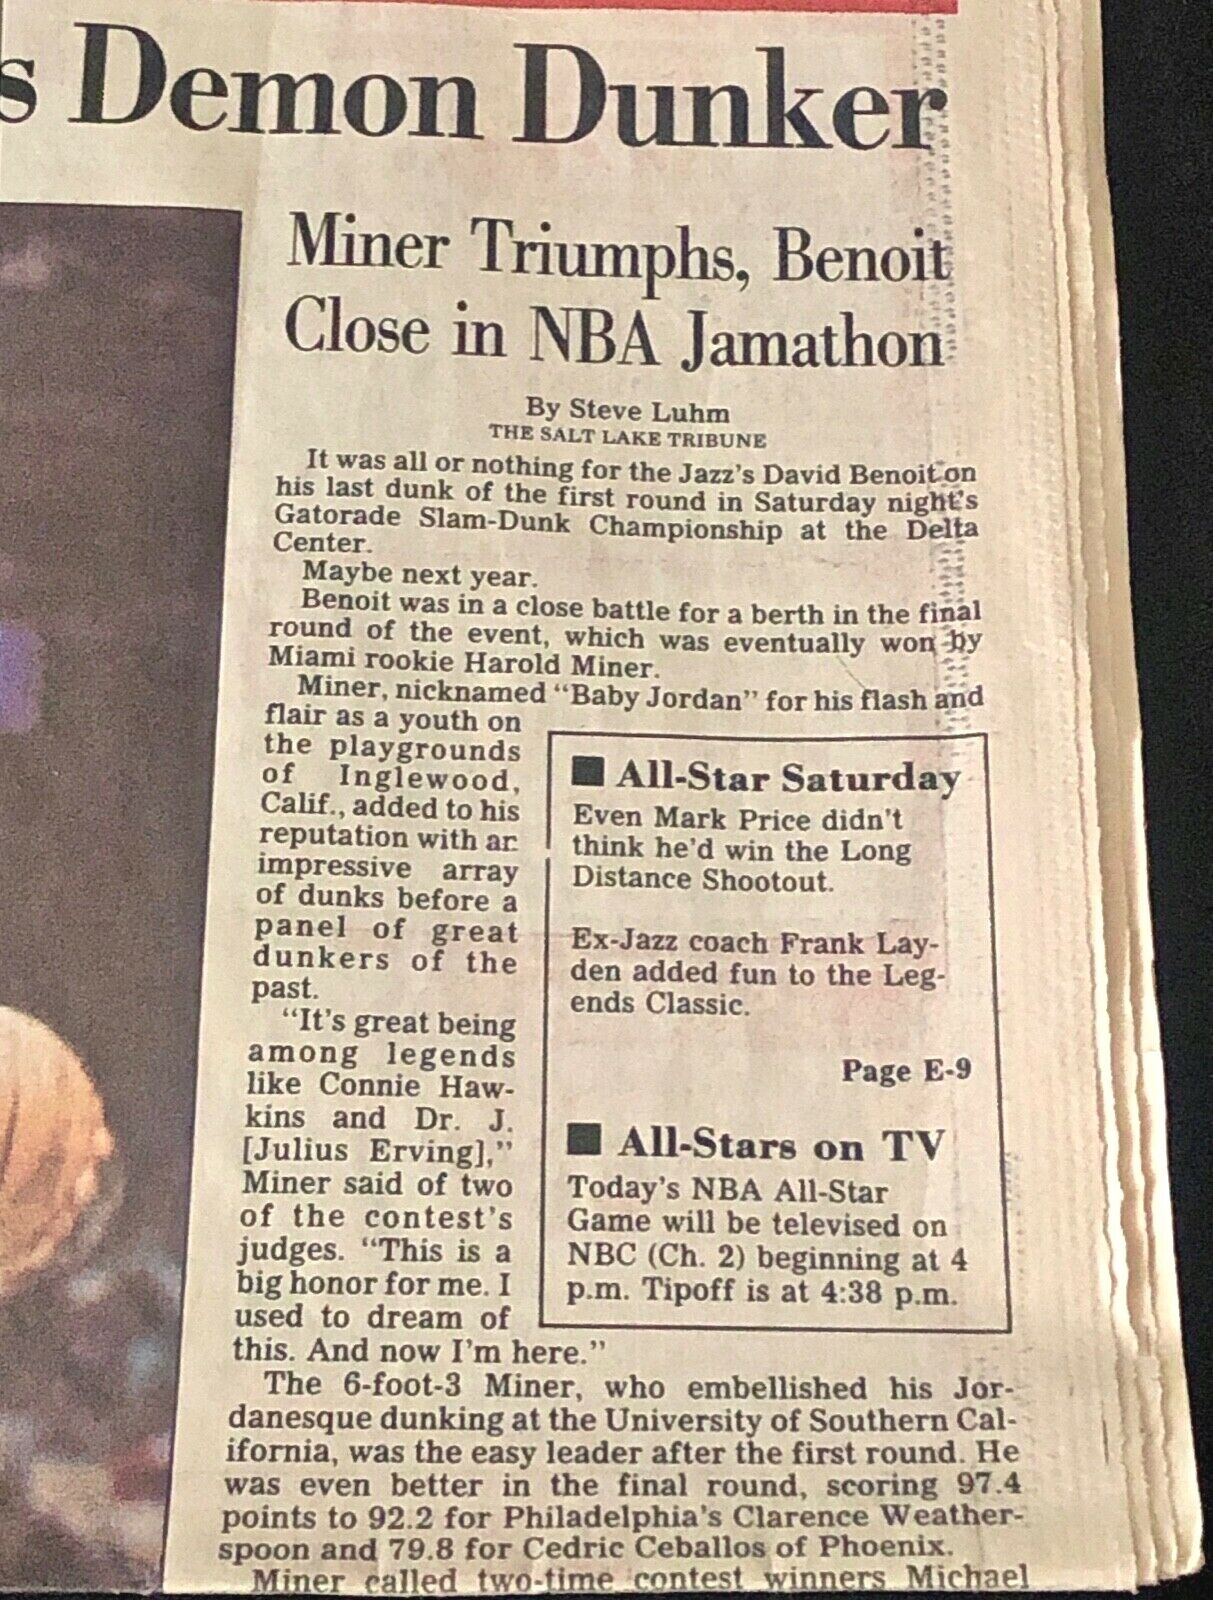 HAROLD MINER "BABY JORDAN" WINS 1993 NBA SLAM DUNK TITLE- UTAH NEWSPAPERS (2) Deseret News + Salt Lake Tribune - фотография #11